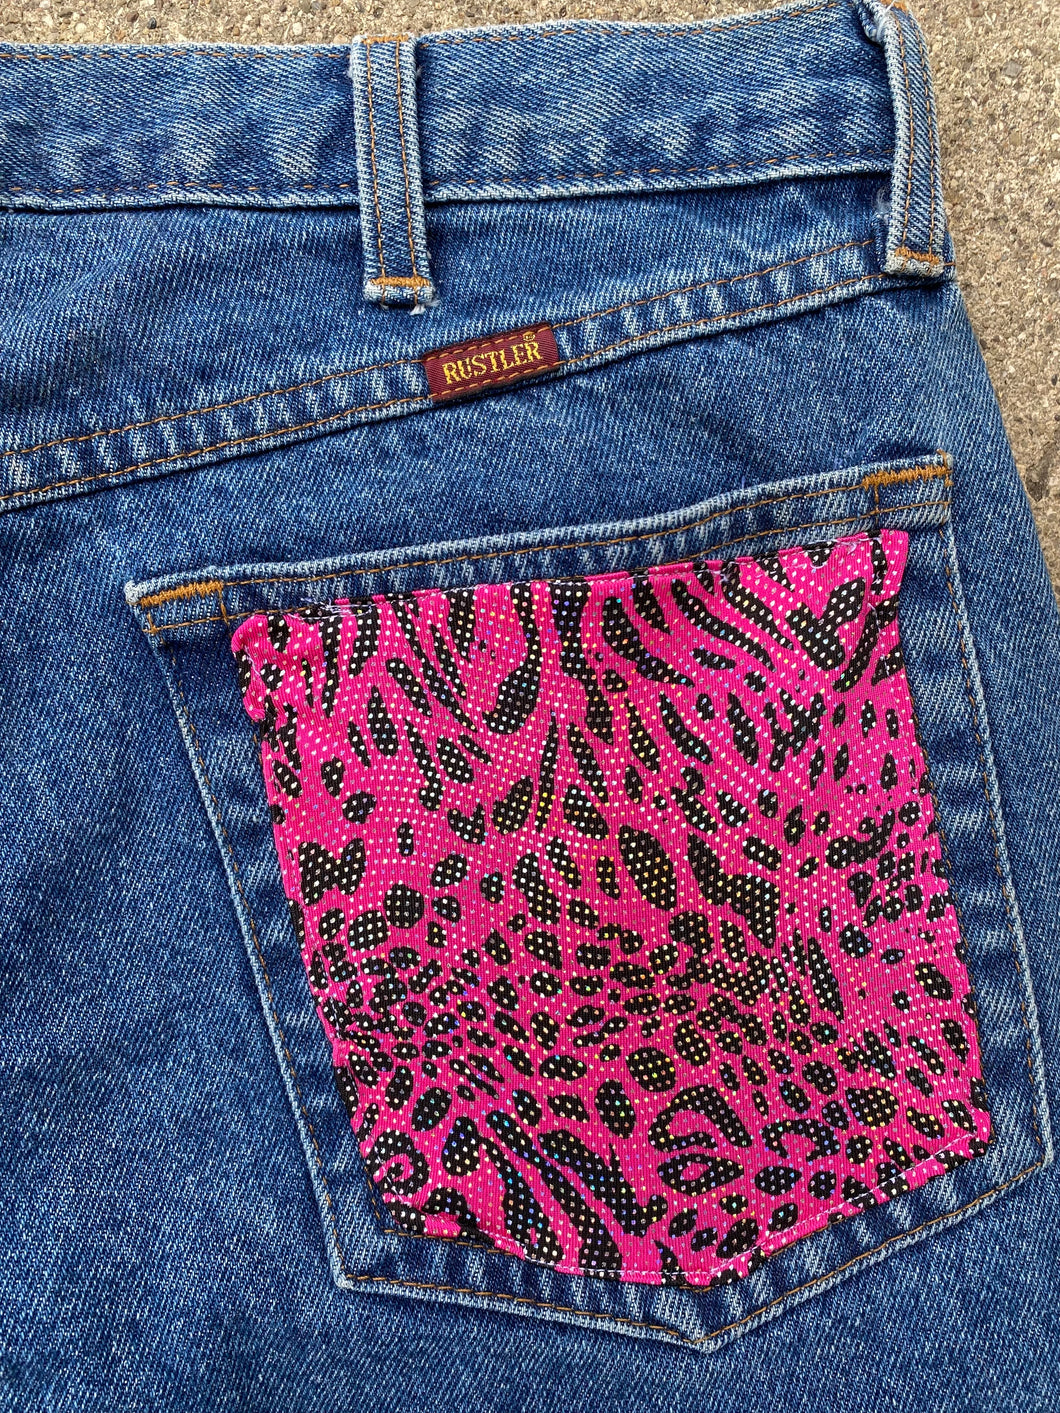 Rustler Jeans Sparkly Pockets